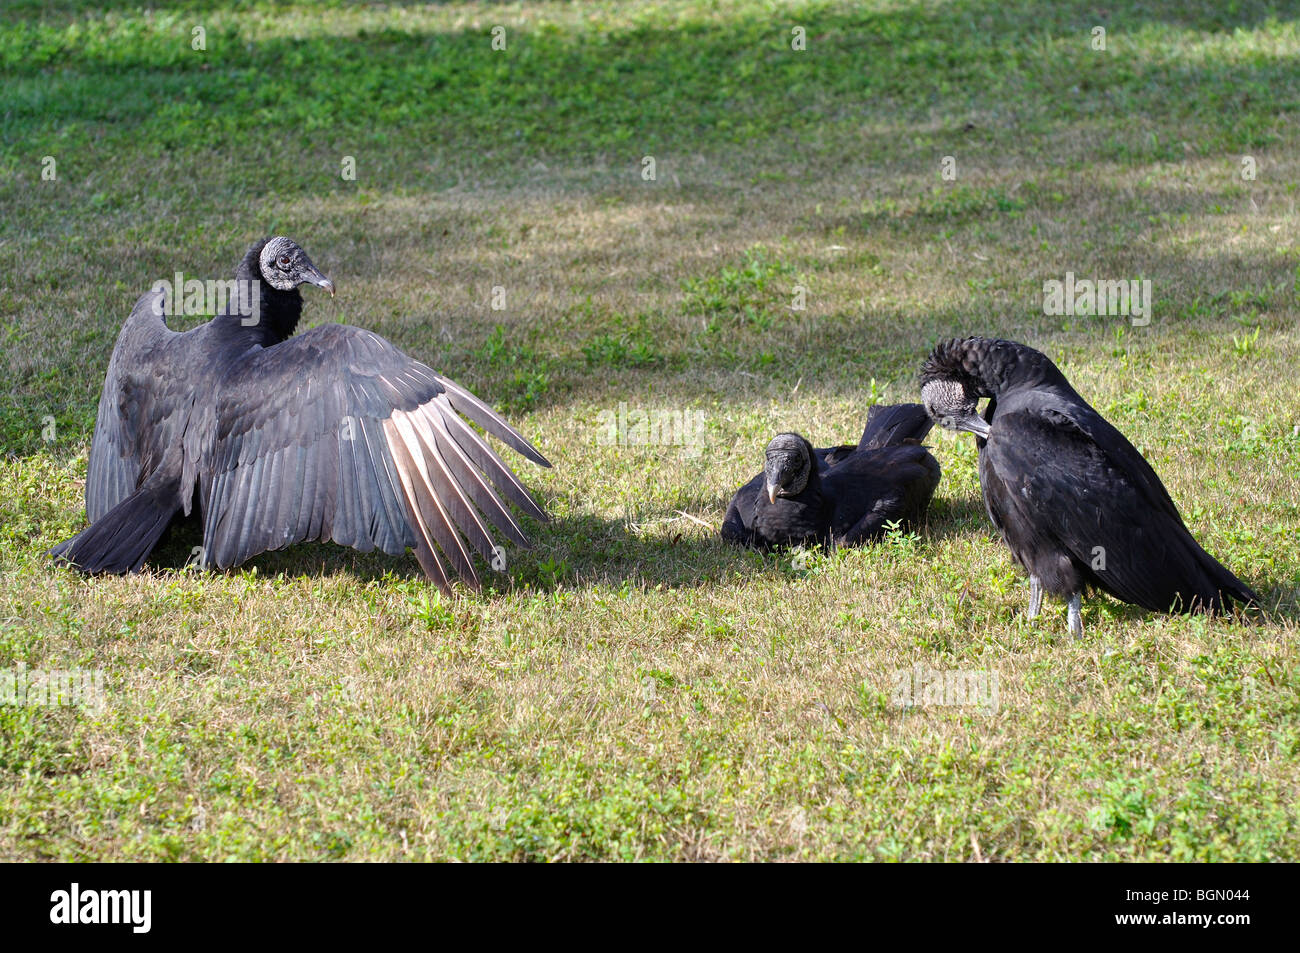 Black vultures at Everglades national park, Florida, USA Stock Photo